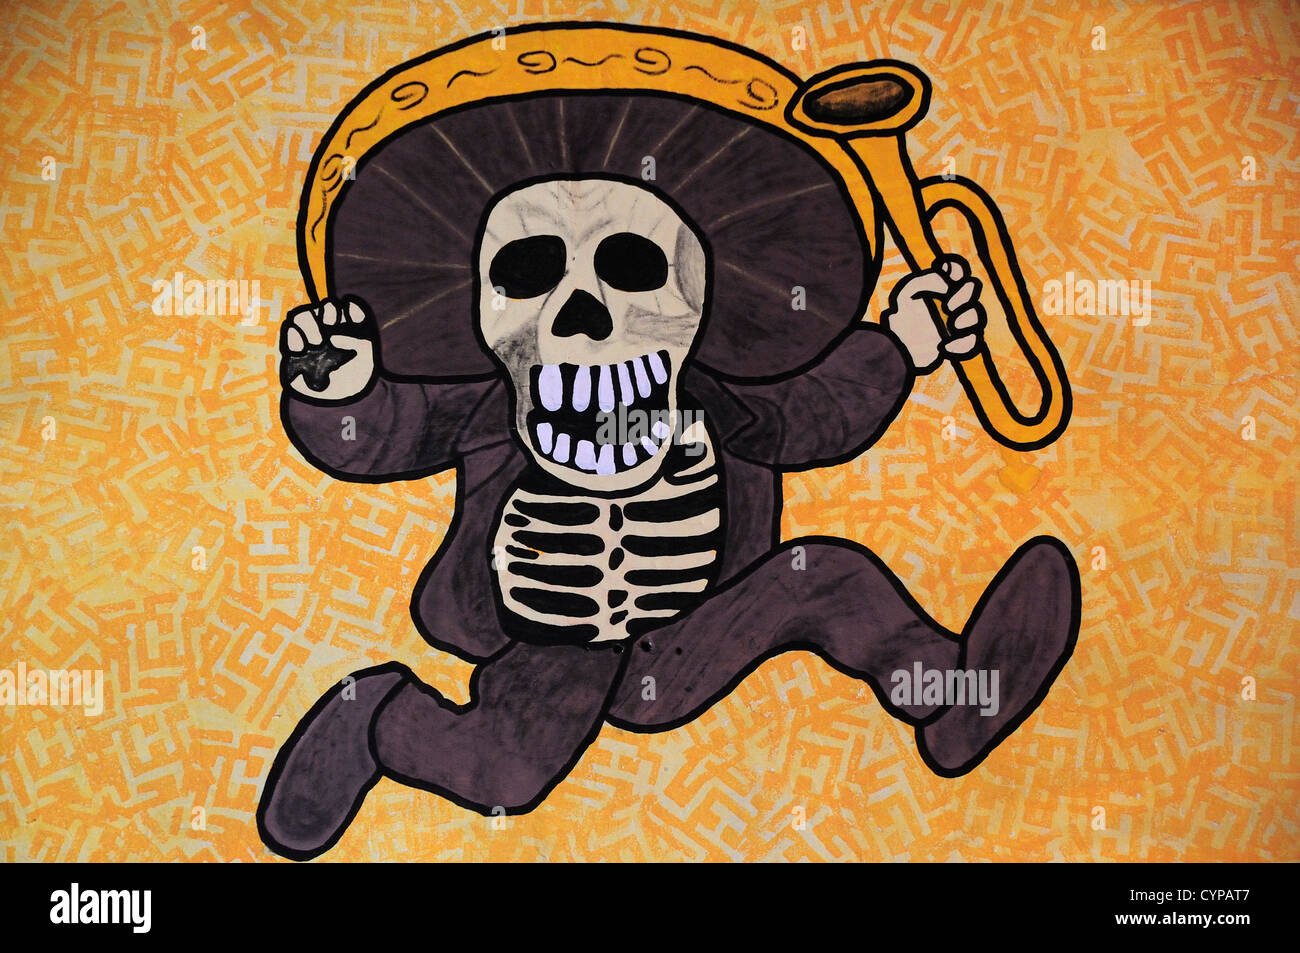 Mexico, Bajio, Queretaro, Day of The Dead wall art depicting skeleton in sombrero holding a trumpet. Stock Photo